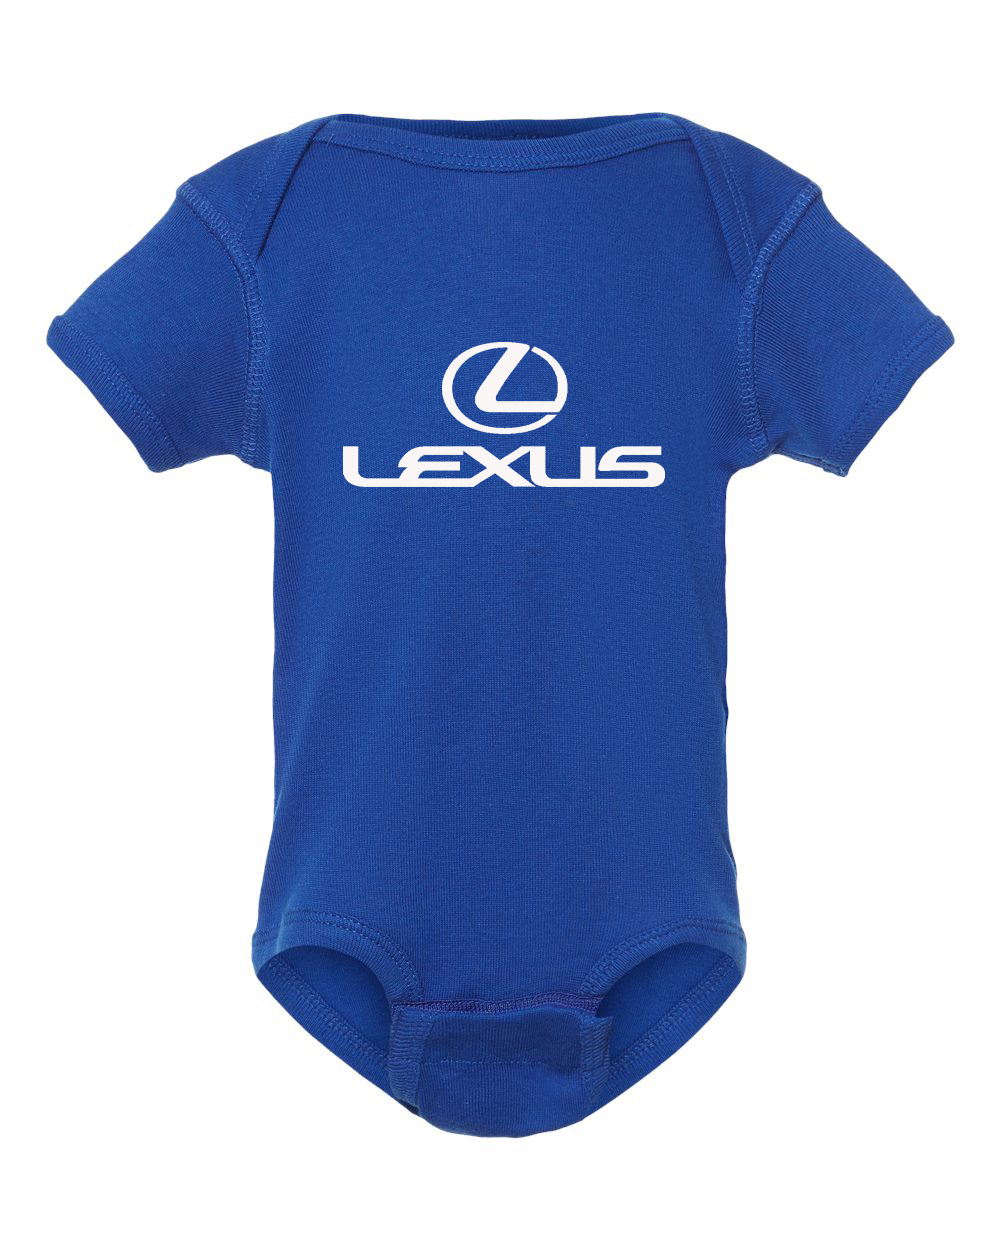 Lexus Car Baby Romper Onesie